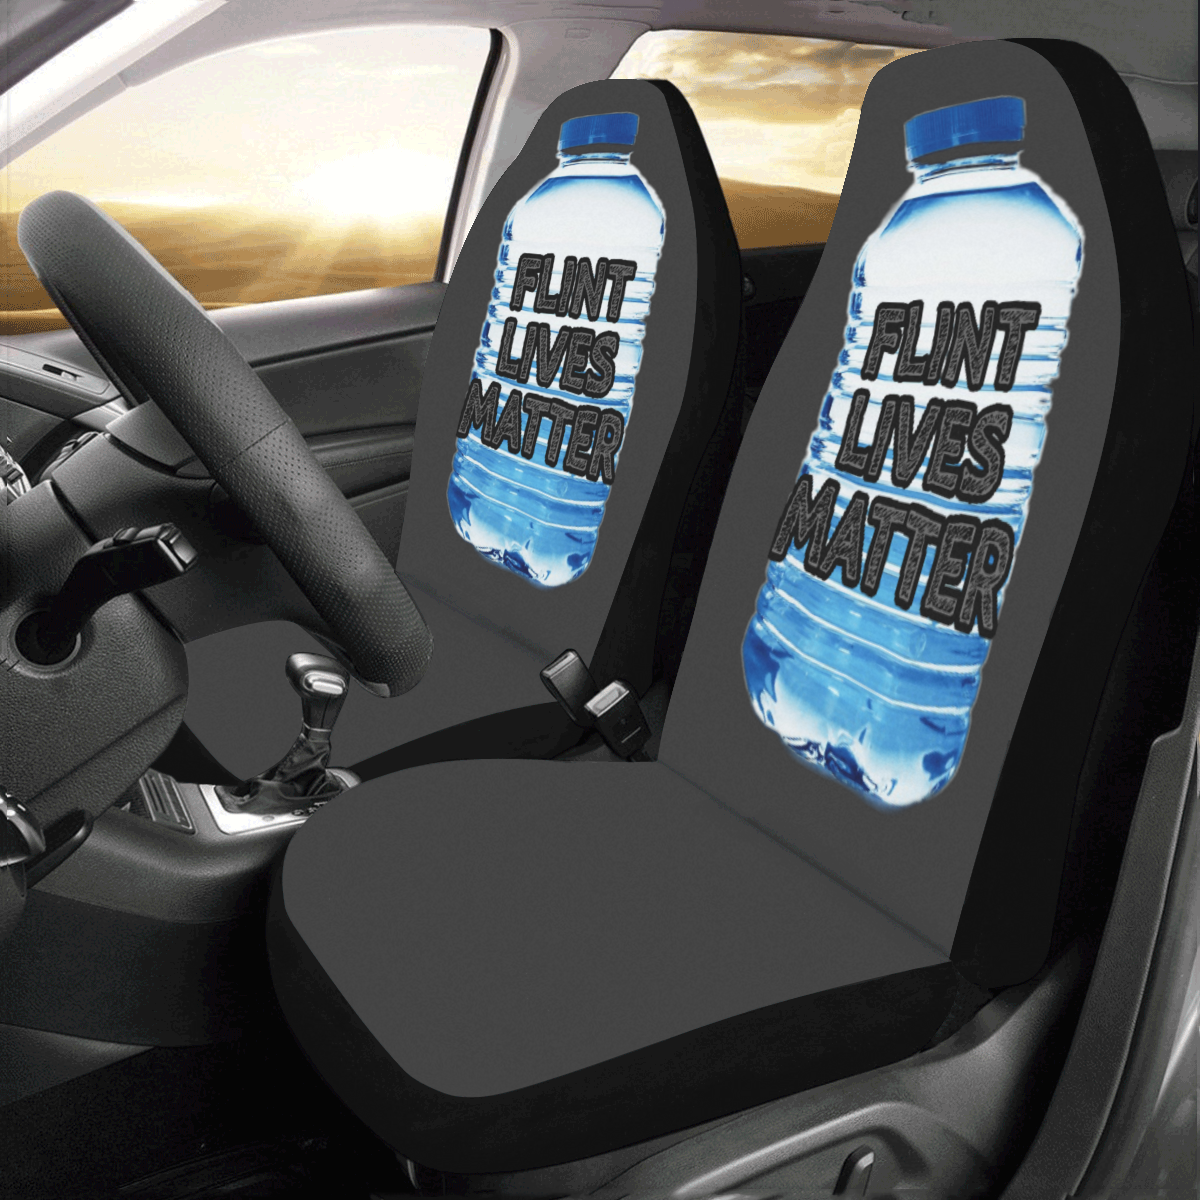 Flint Lives Matter Car Seat Covers (Set of 2)